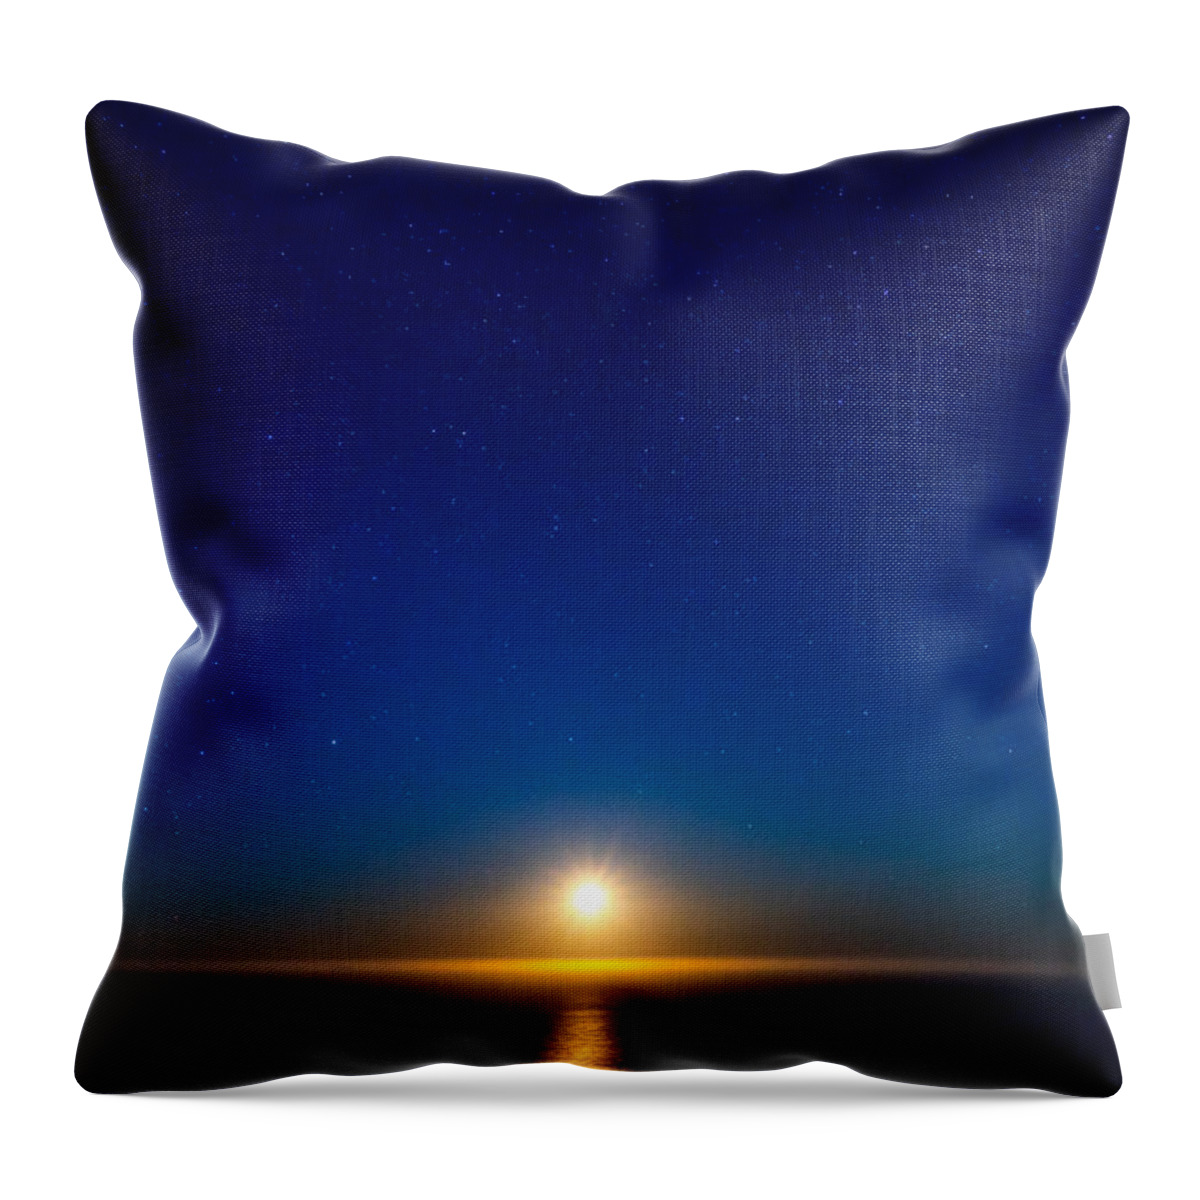 Big Sur Throw Pillow featuring the photograph Big Sur Moonset by Derek Dean